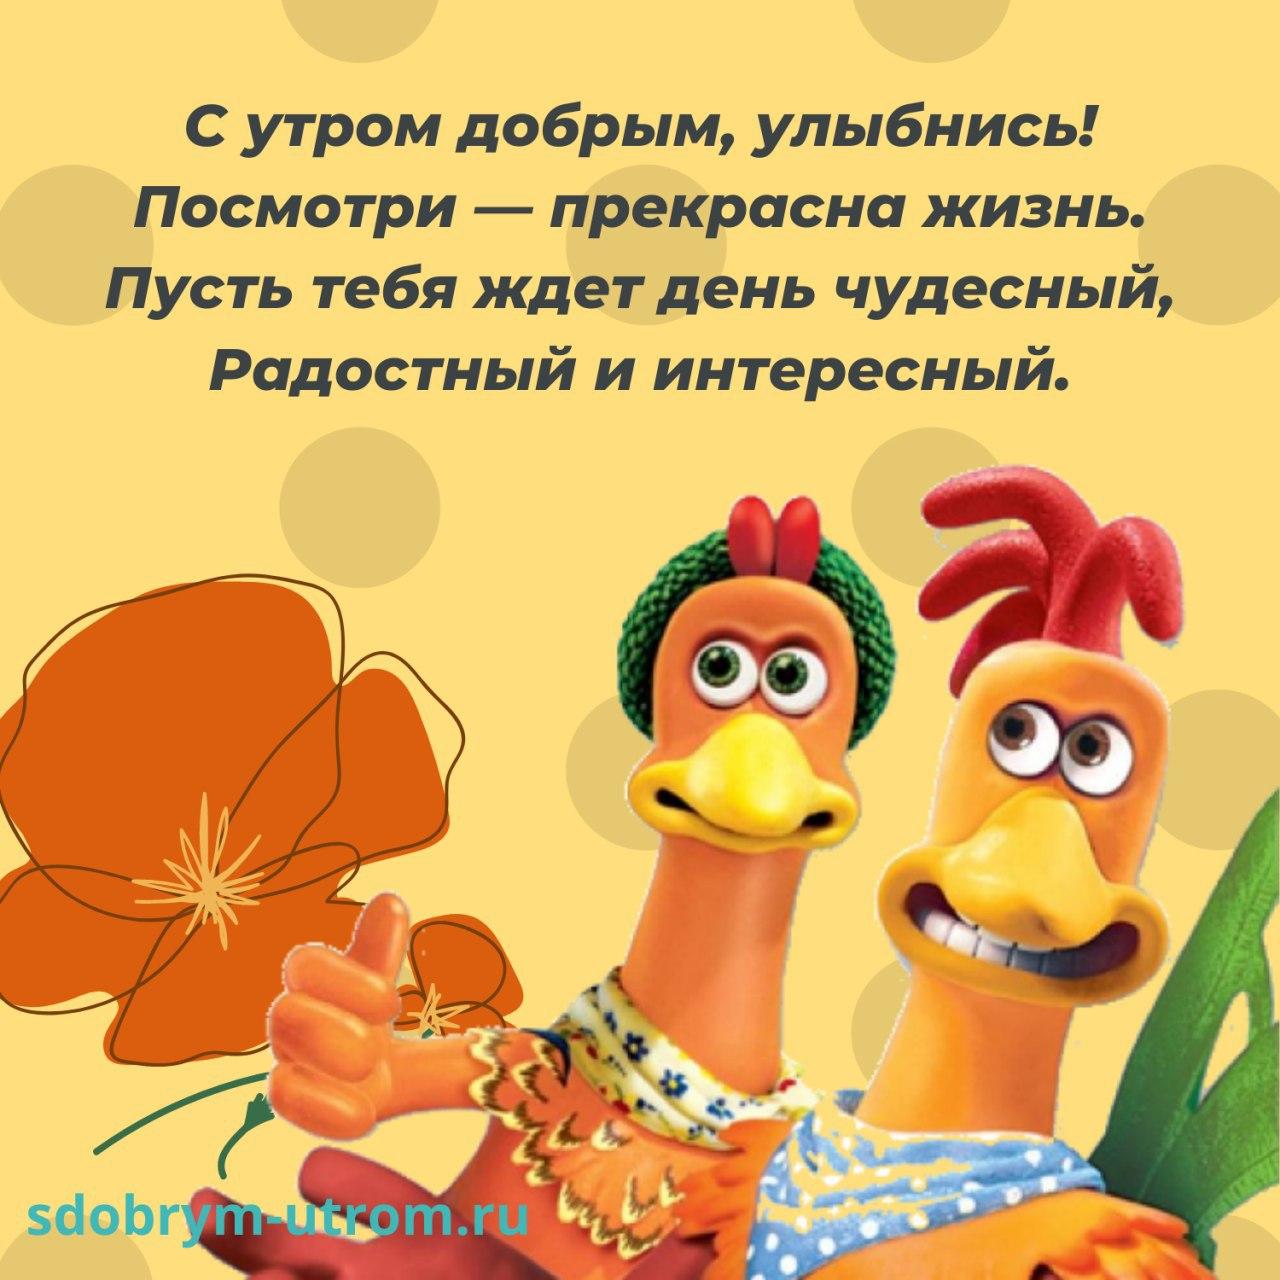 Смешная открытка с курицами